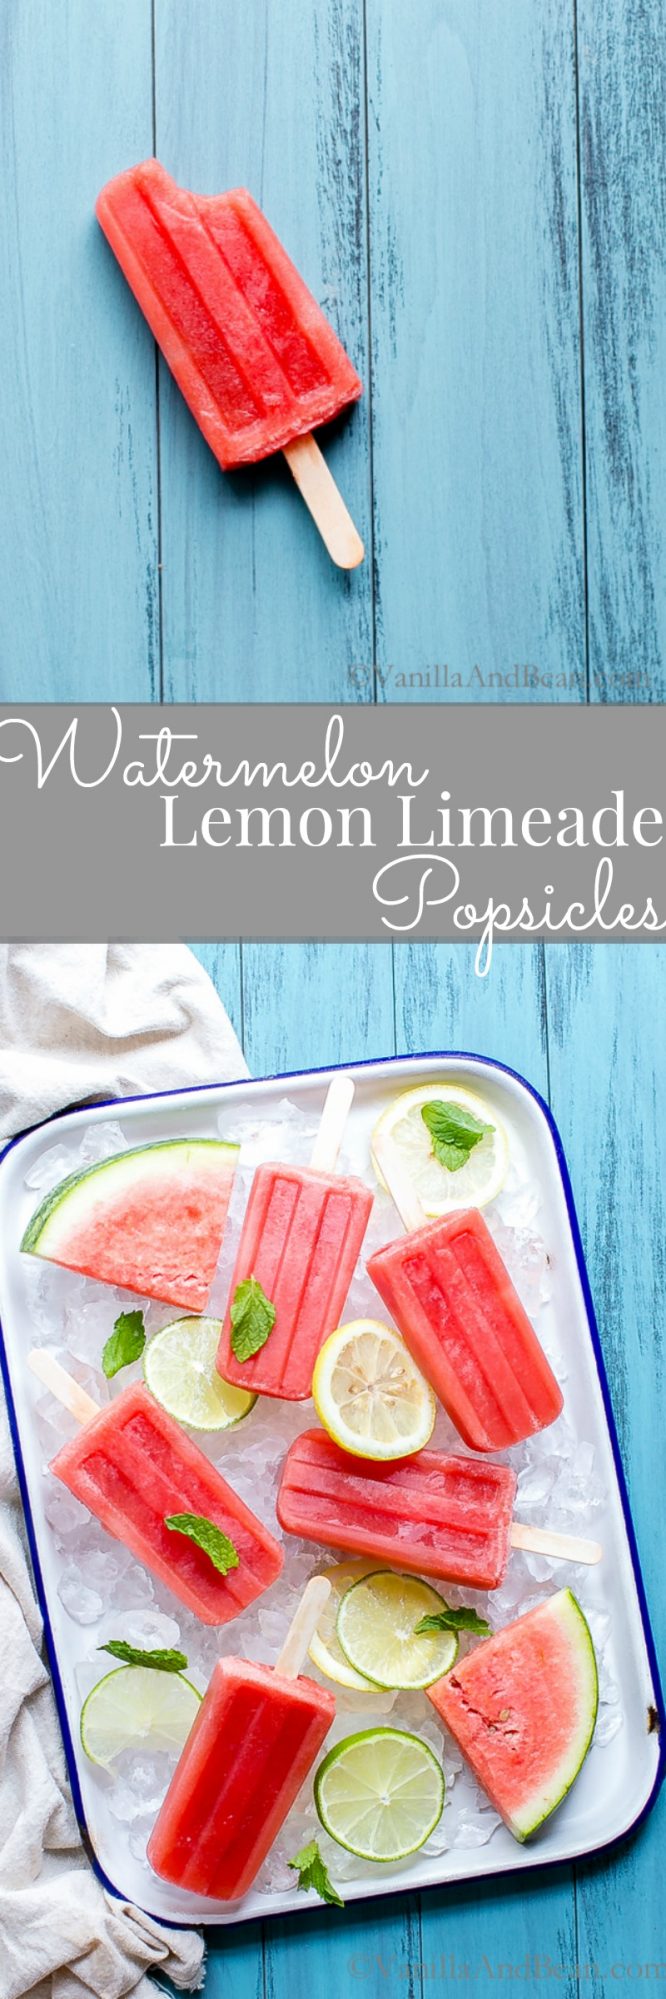 Watermelon Lemon Limeade Popsicles